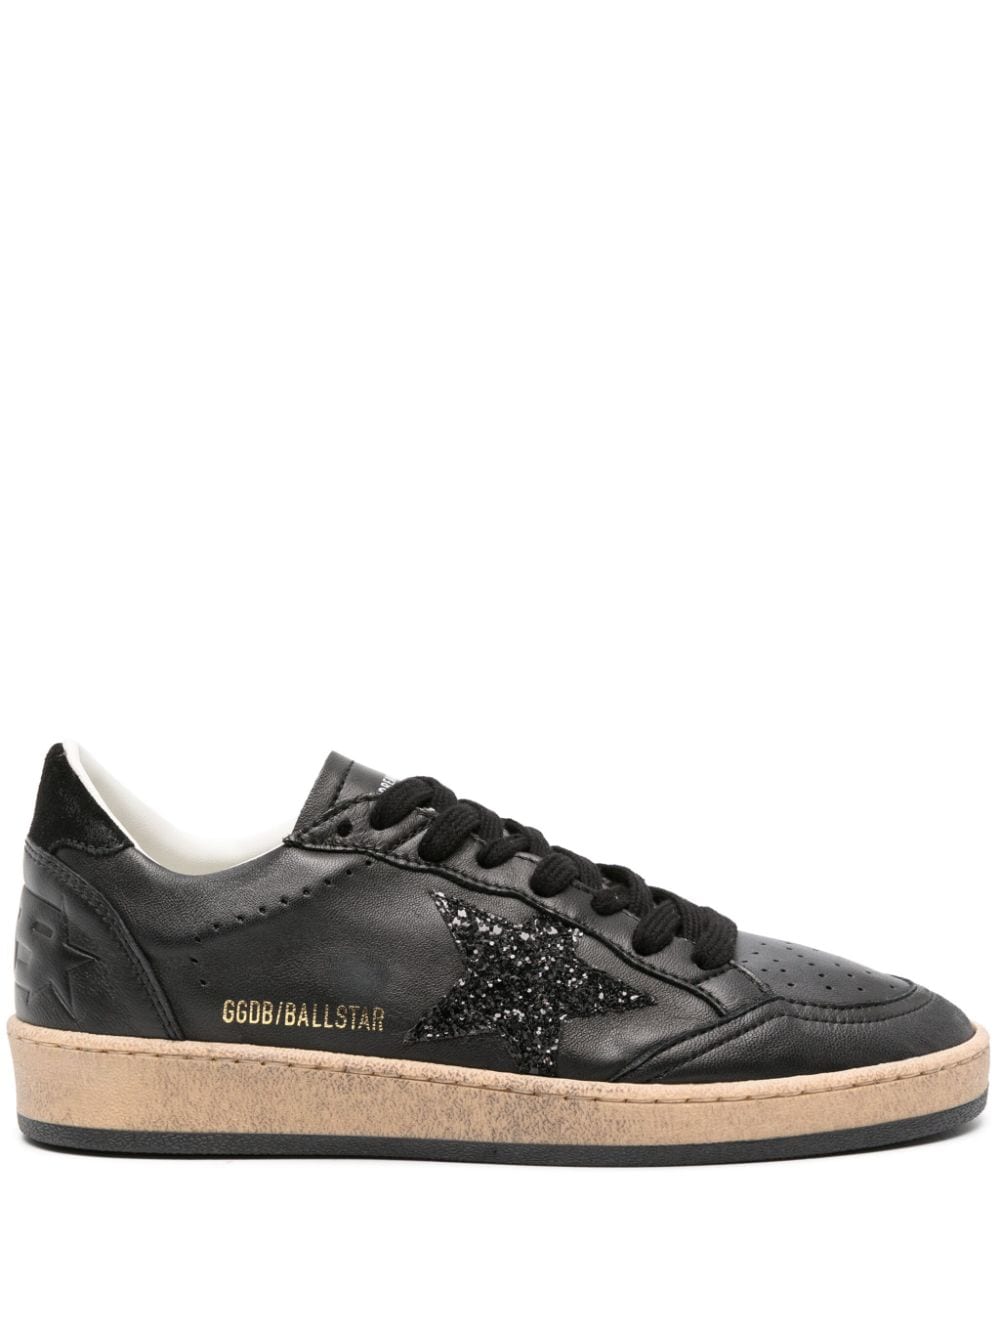 Golden Goose Ball Star leather sneakers - Black von Golden Goose